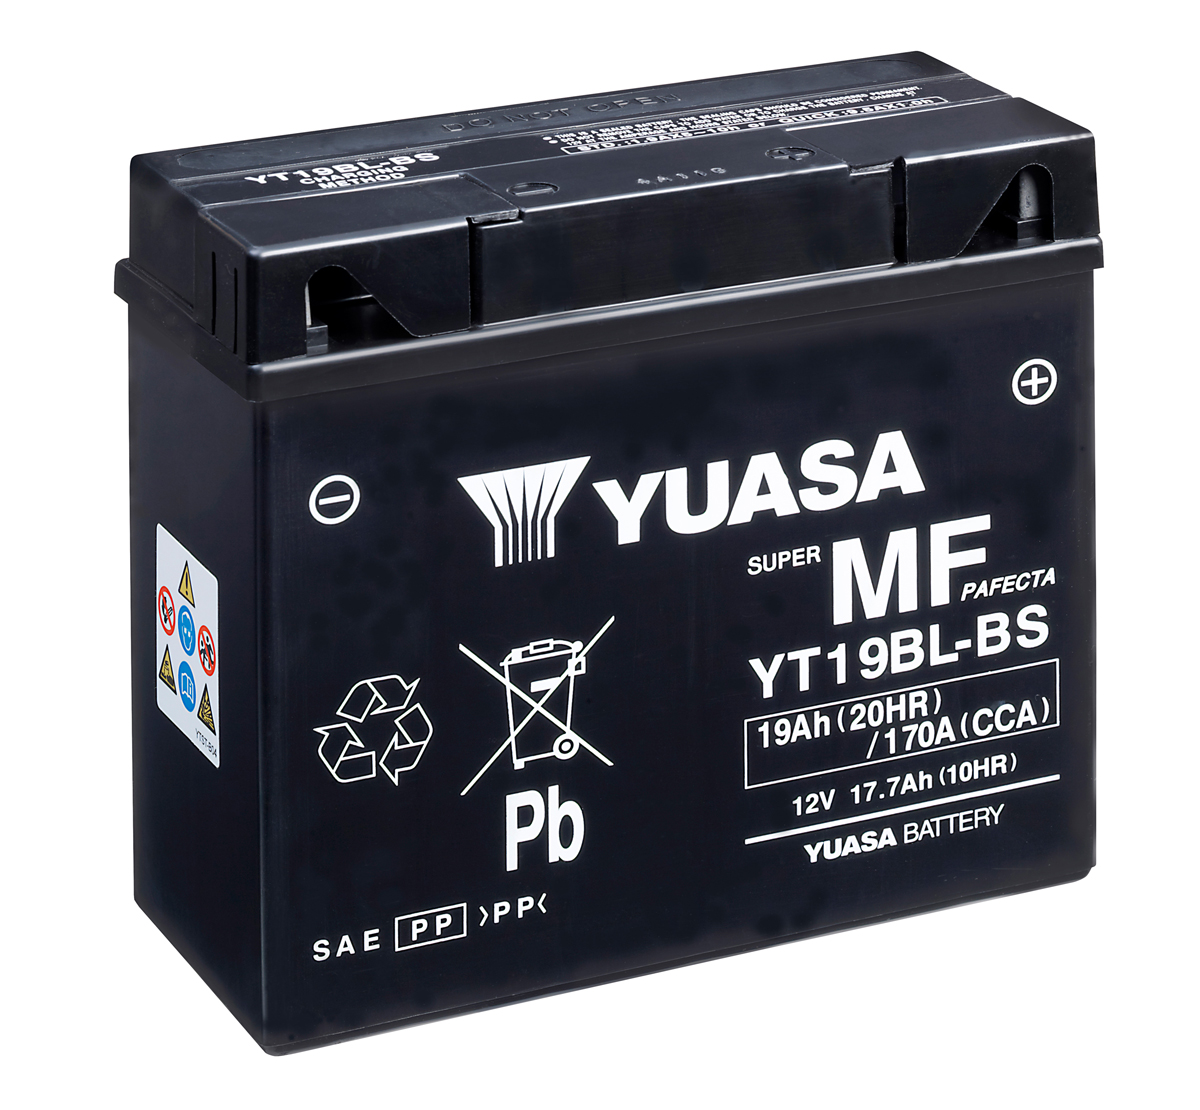 Yuasa YT19BL-BS BMW Motorcycle Battery